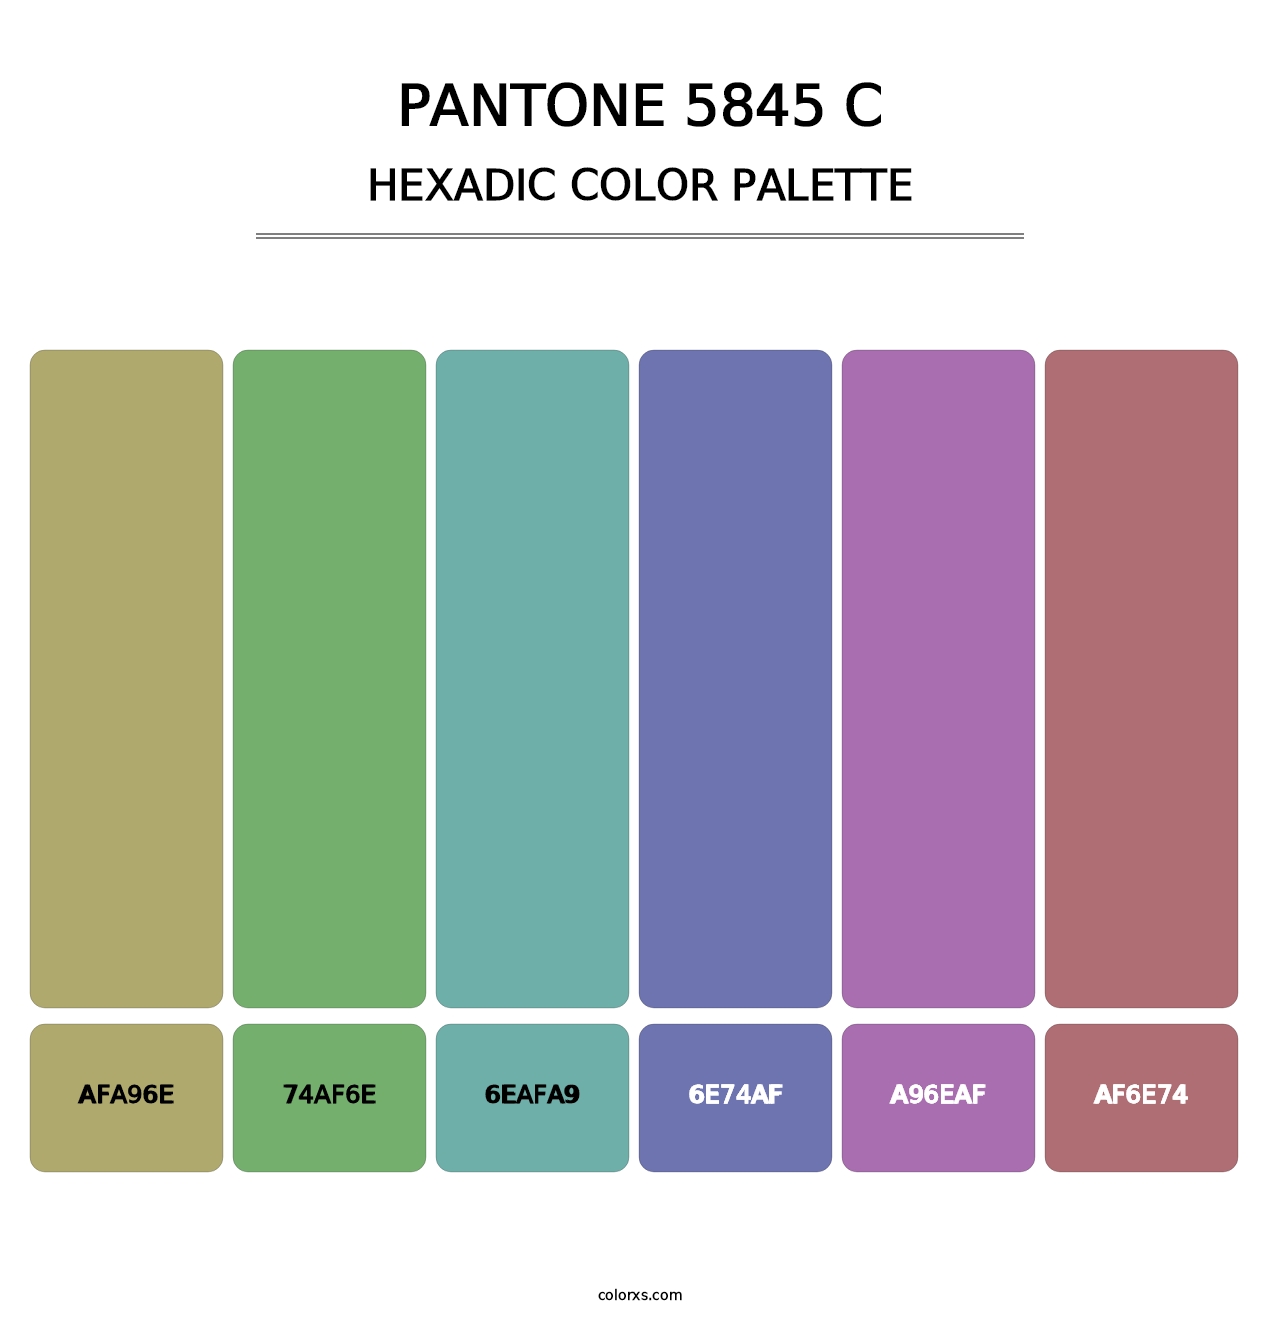 PANTONE 5845 C - Hexadic Color Palette